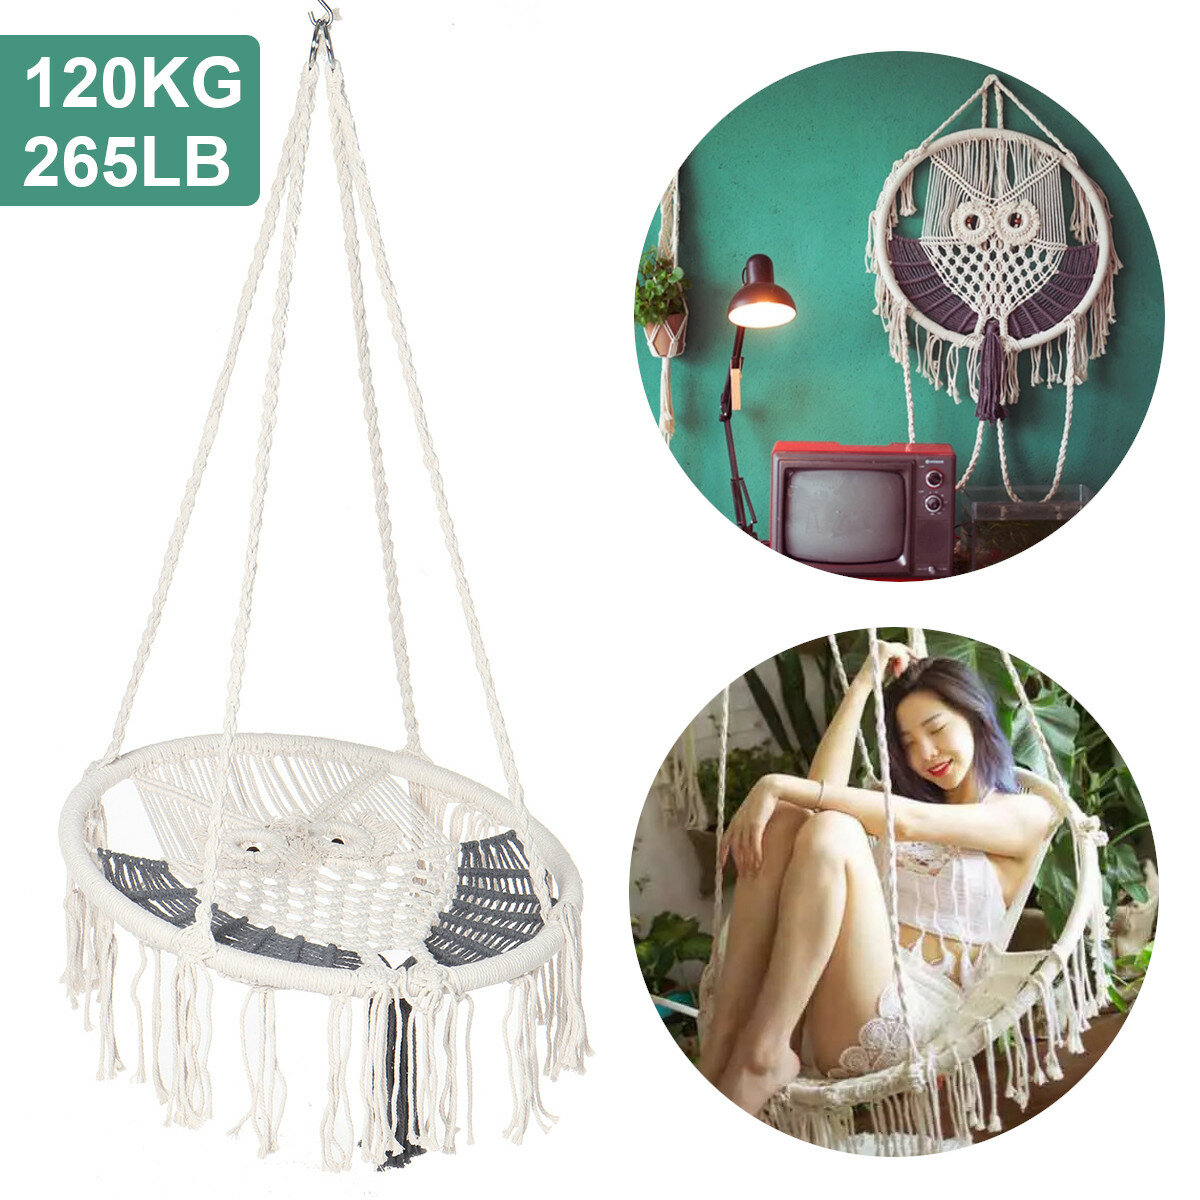 Image of Round Hammock Chair Swing Hanging Chairs Outdoor Garden Indoor Max Load 120kg